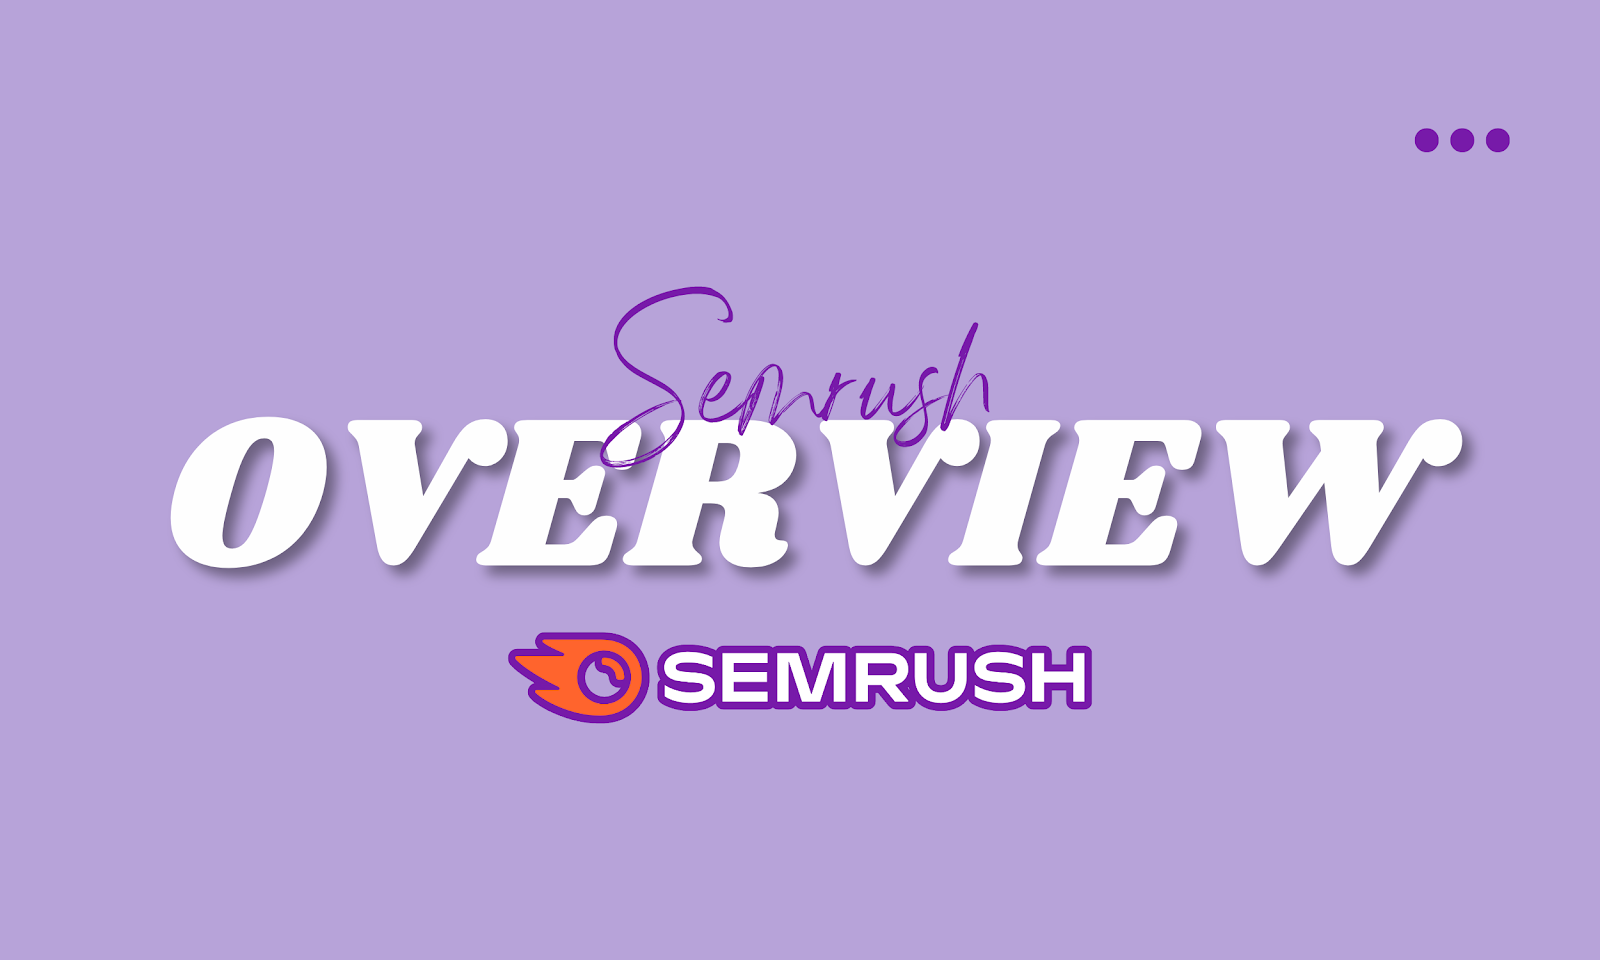 Semrush: SEO Tools, A Review Softlist.io